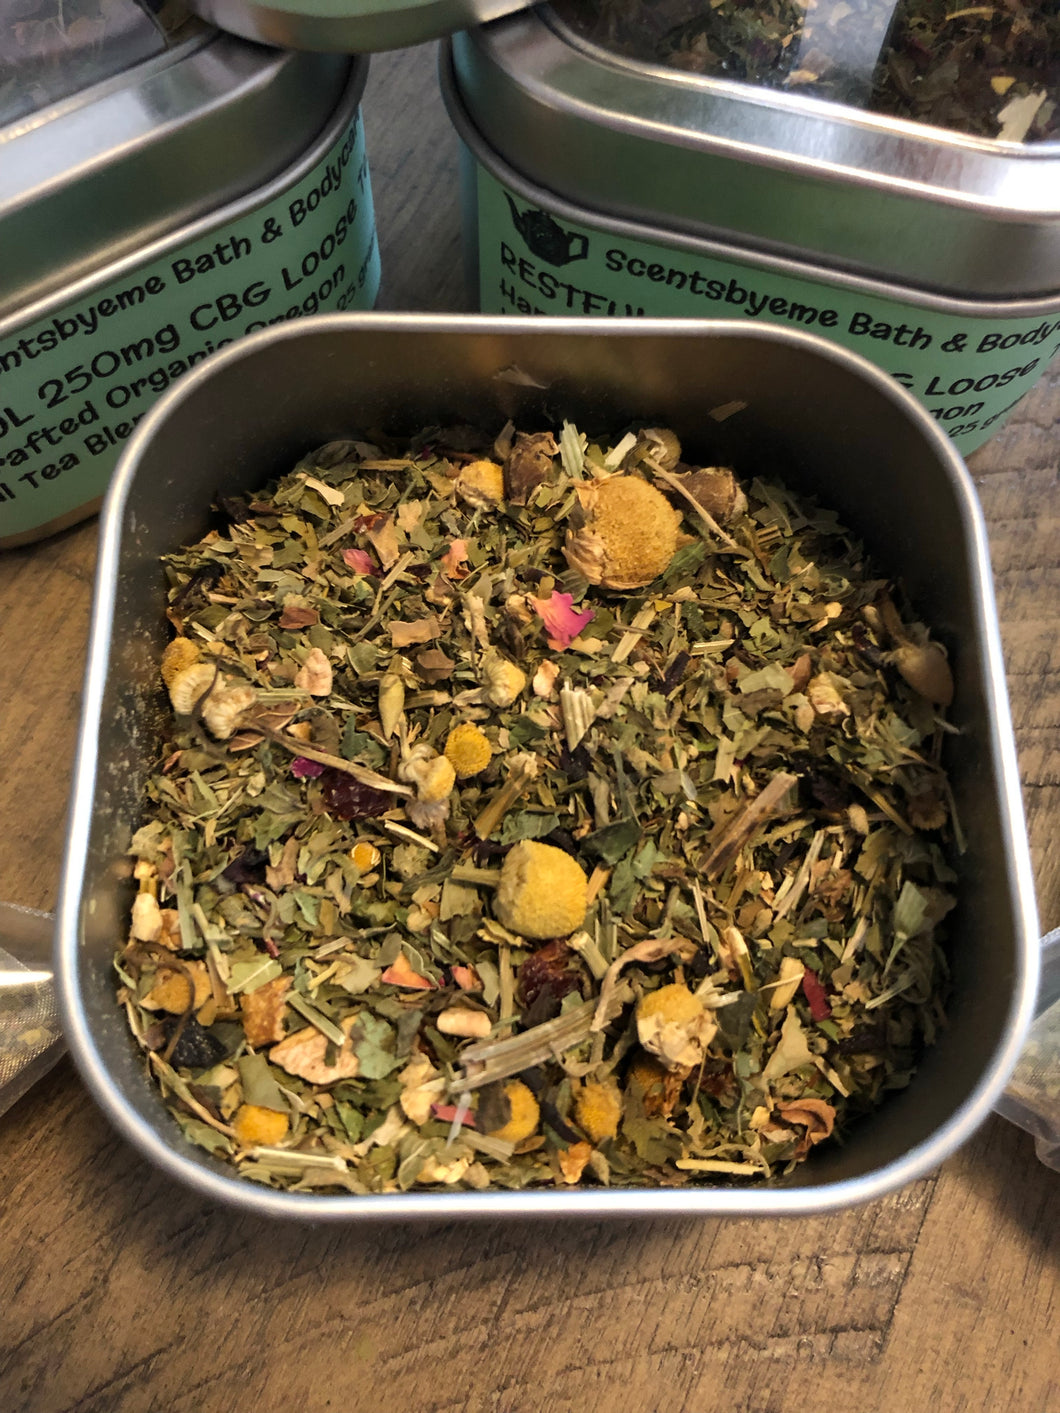 Restful 250mg CBG Organic Herbal Loose Tea Blend